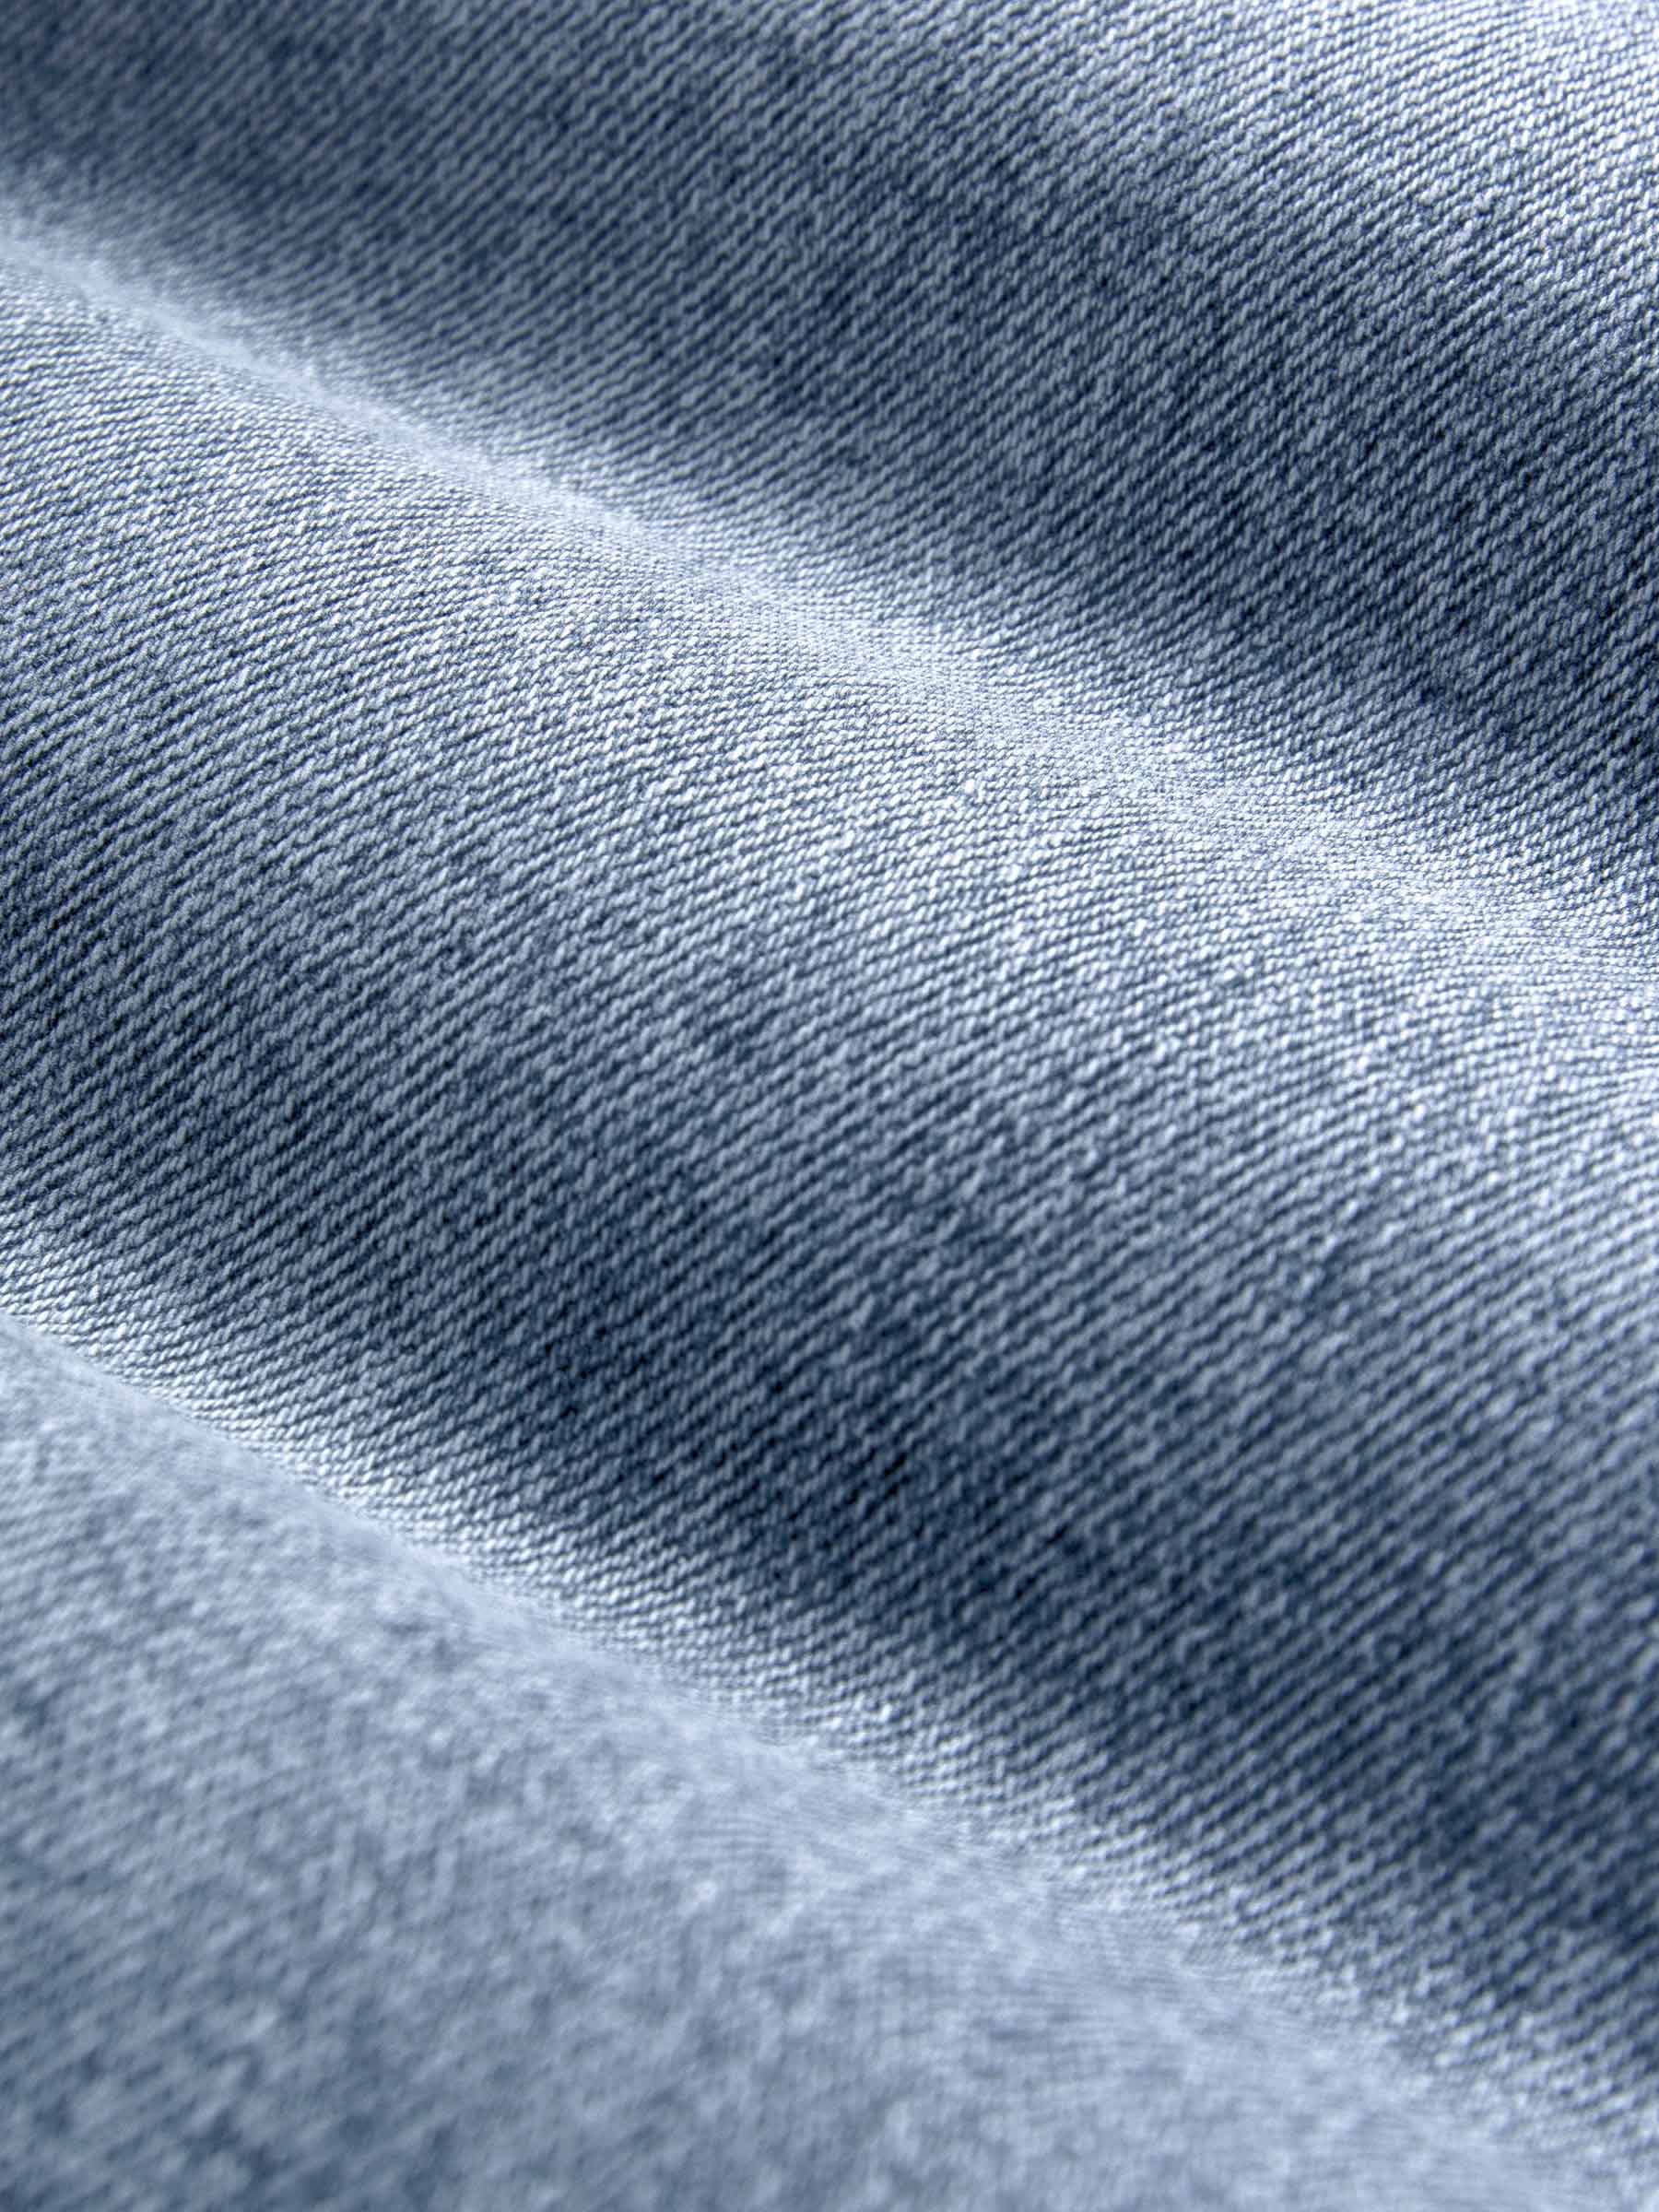 Jeans 82176 Perceval Light Blue